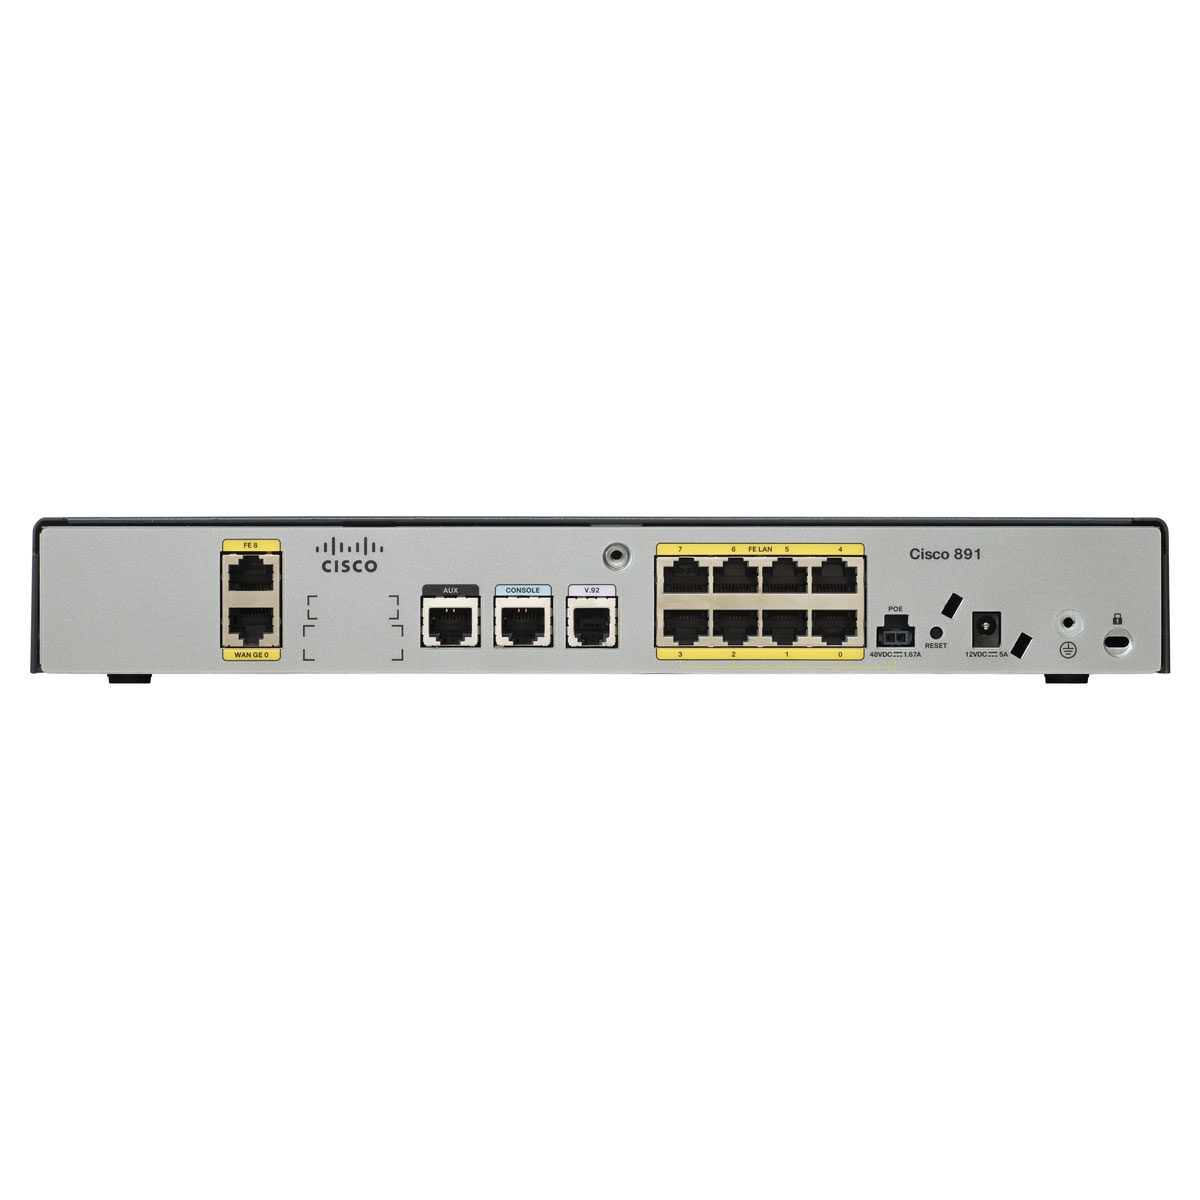 CISCO891-K9 V02 Integrated Service Router